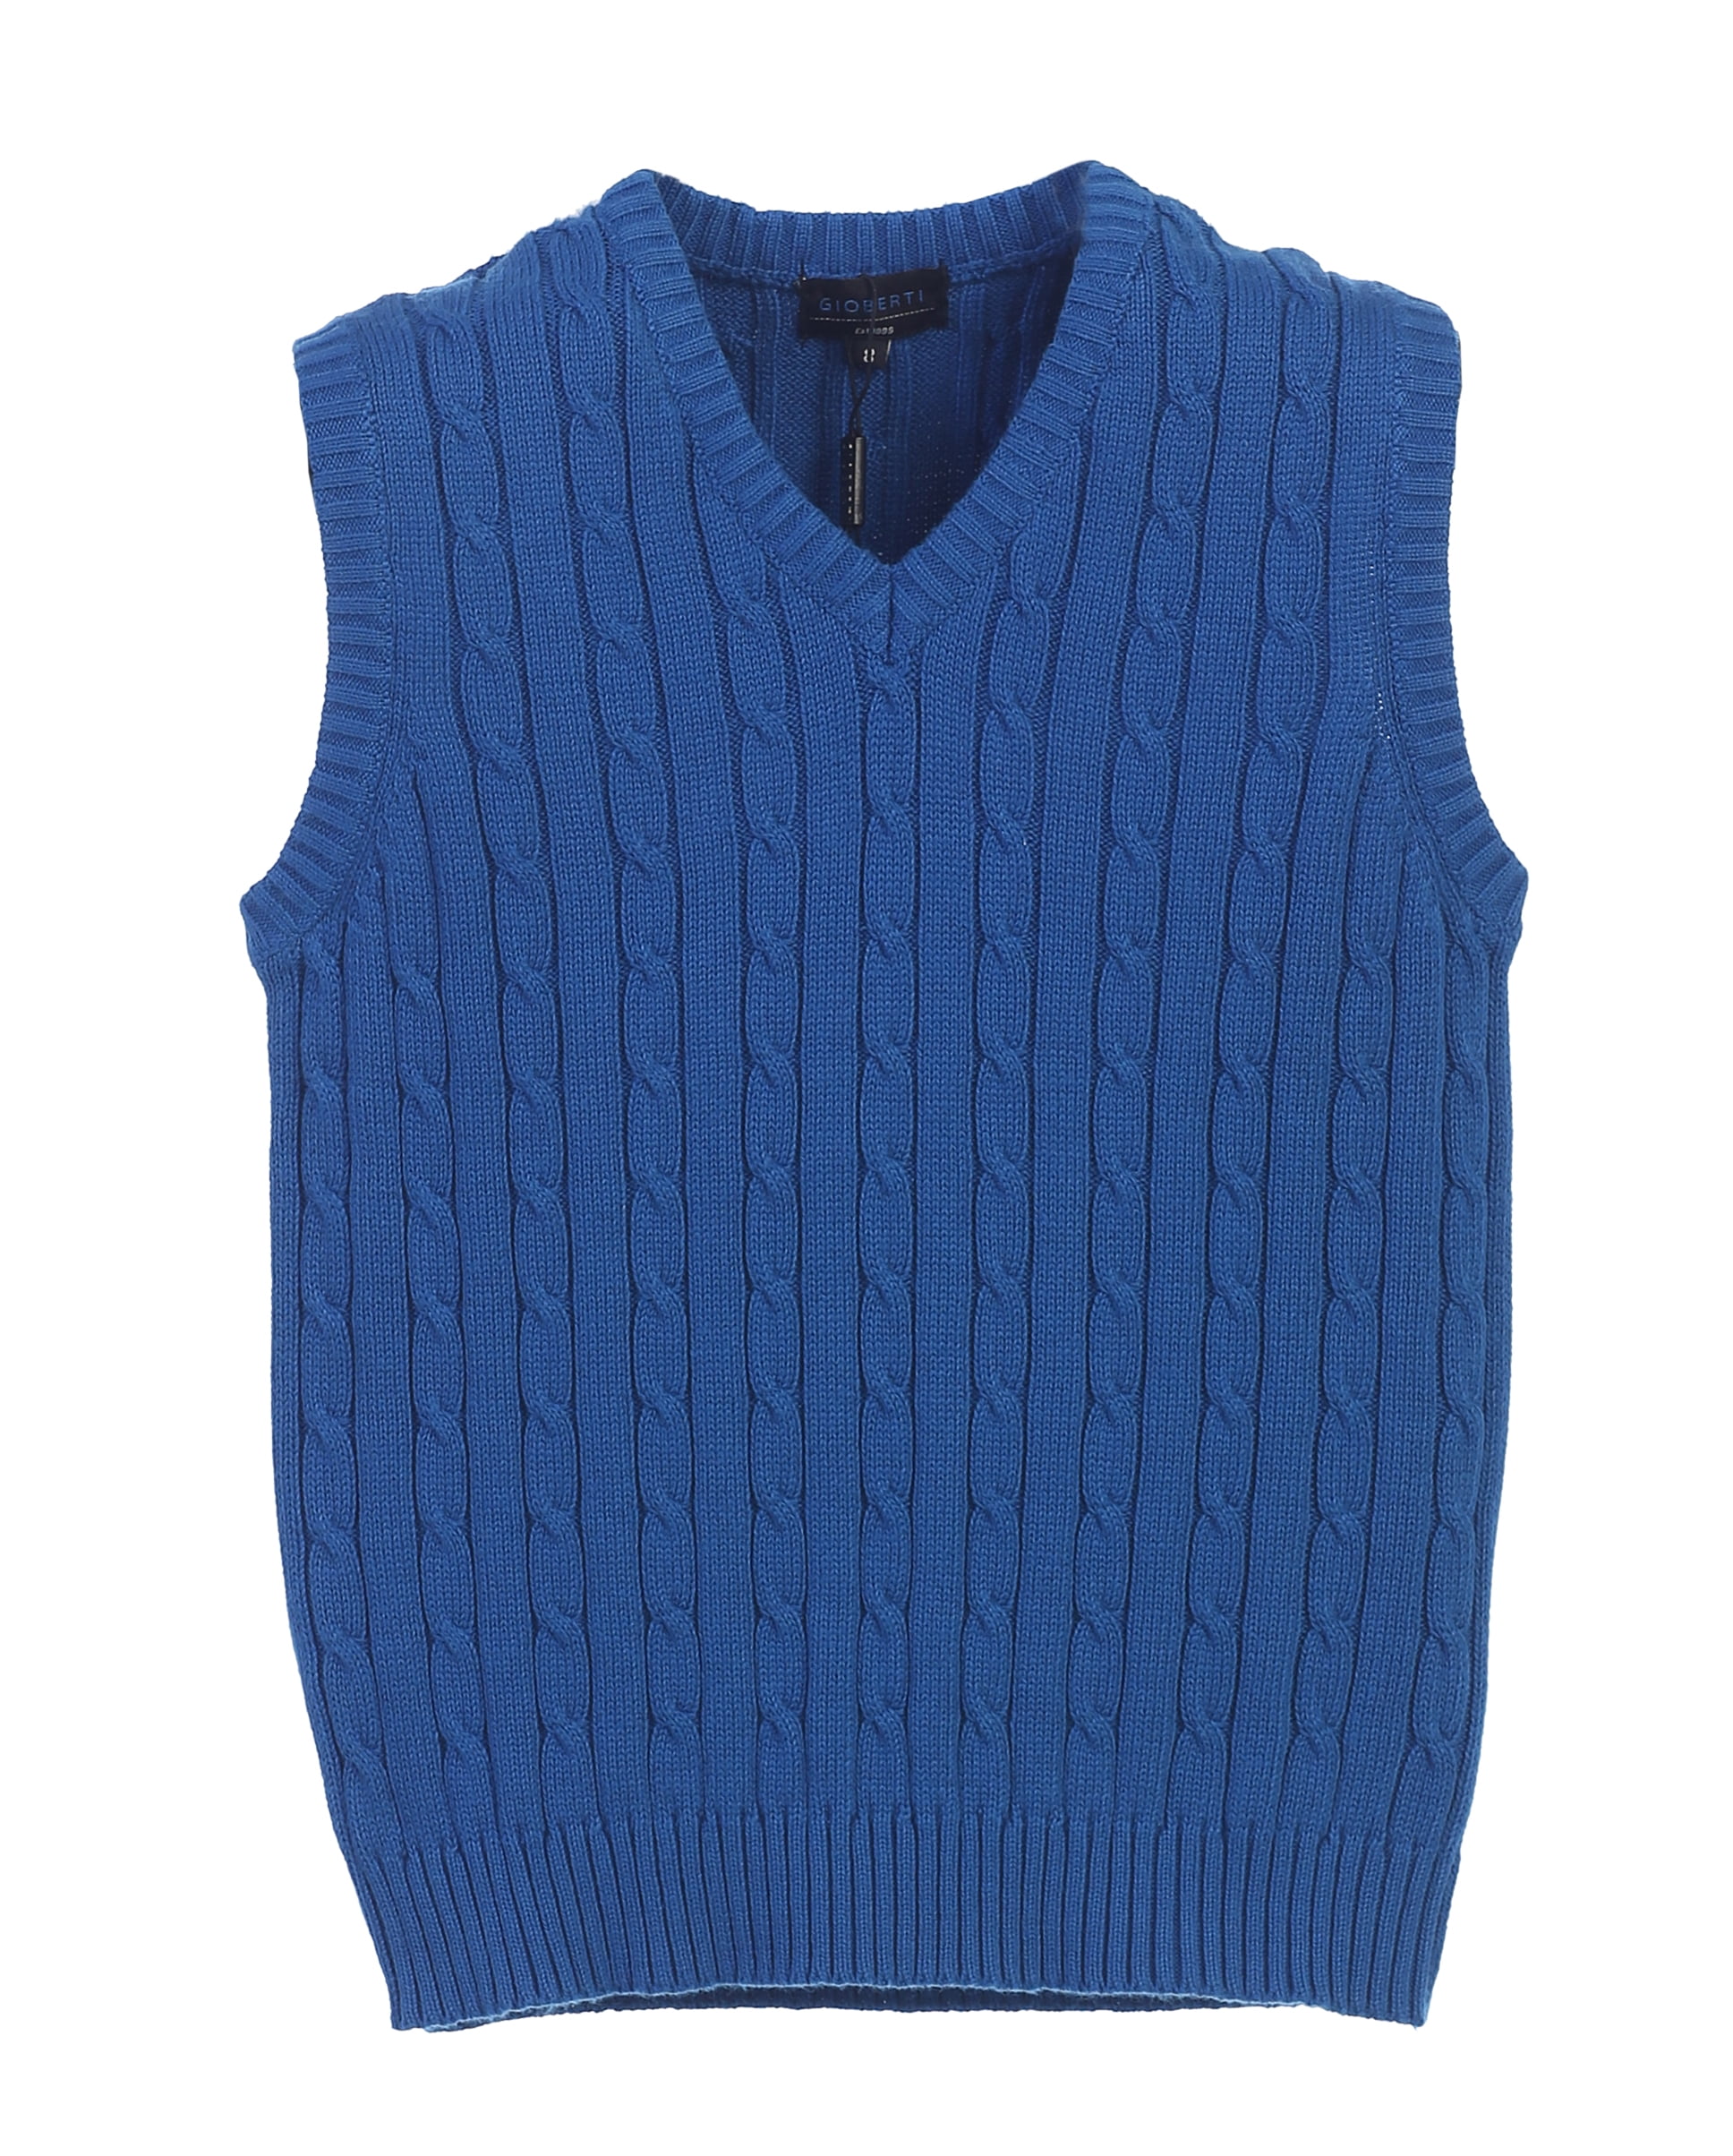 Gioberti Kids and Boys 100% Cotton Soft V-Neck Cable Knit Sweater Vest ...